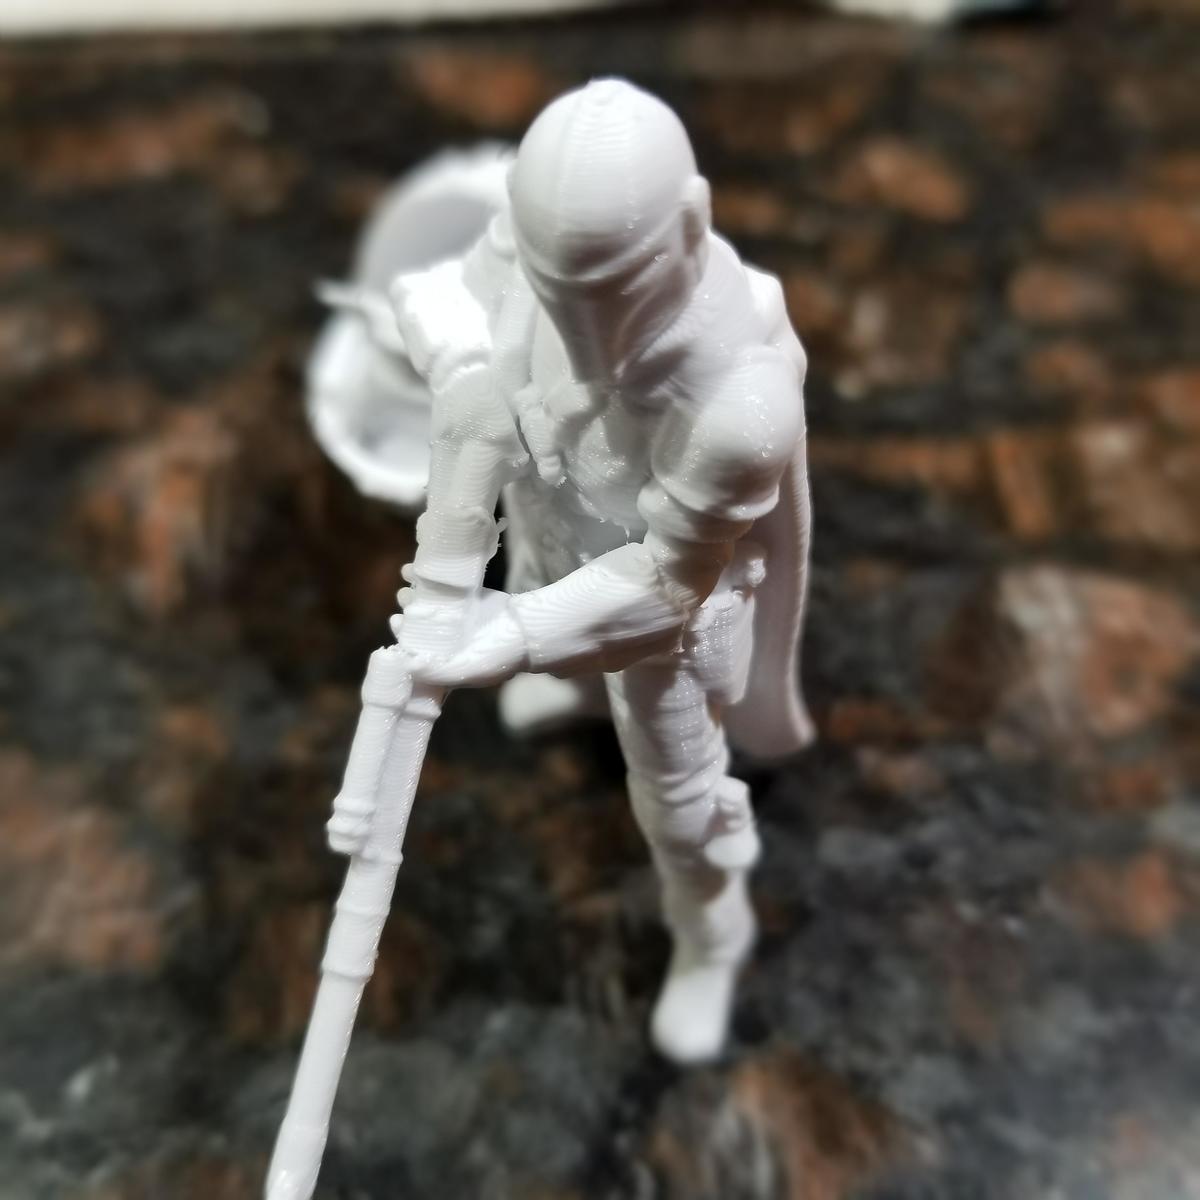 Figurine 3D printed using FDM method